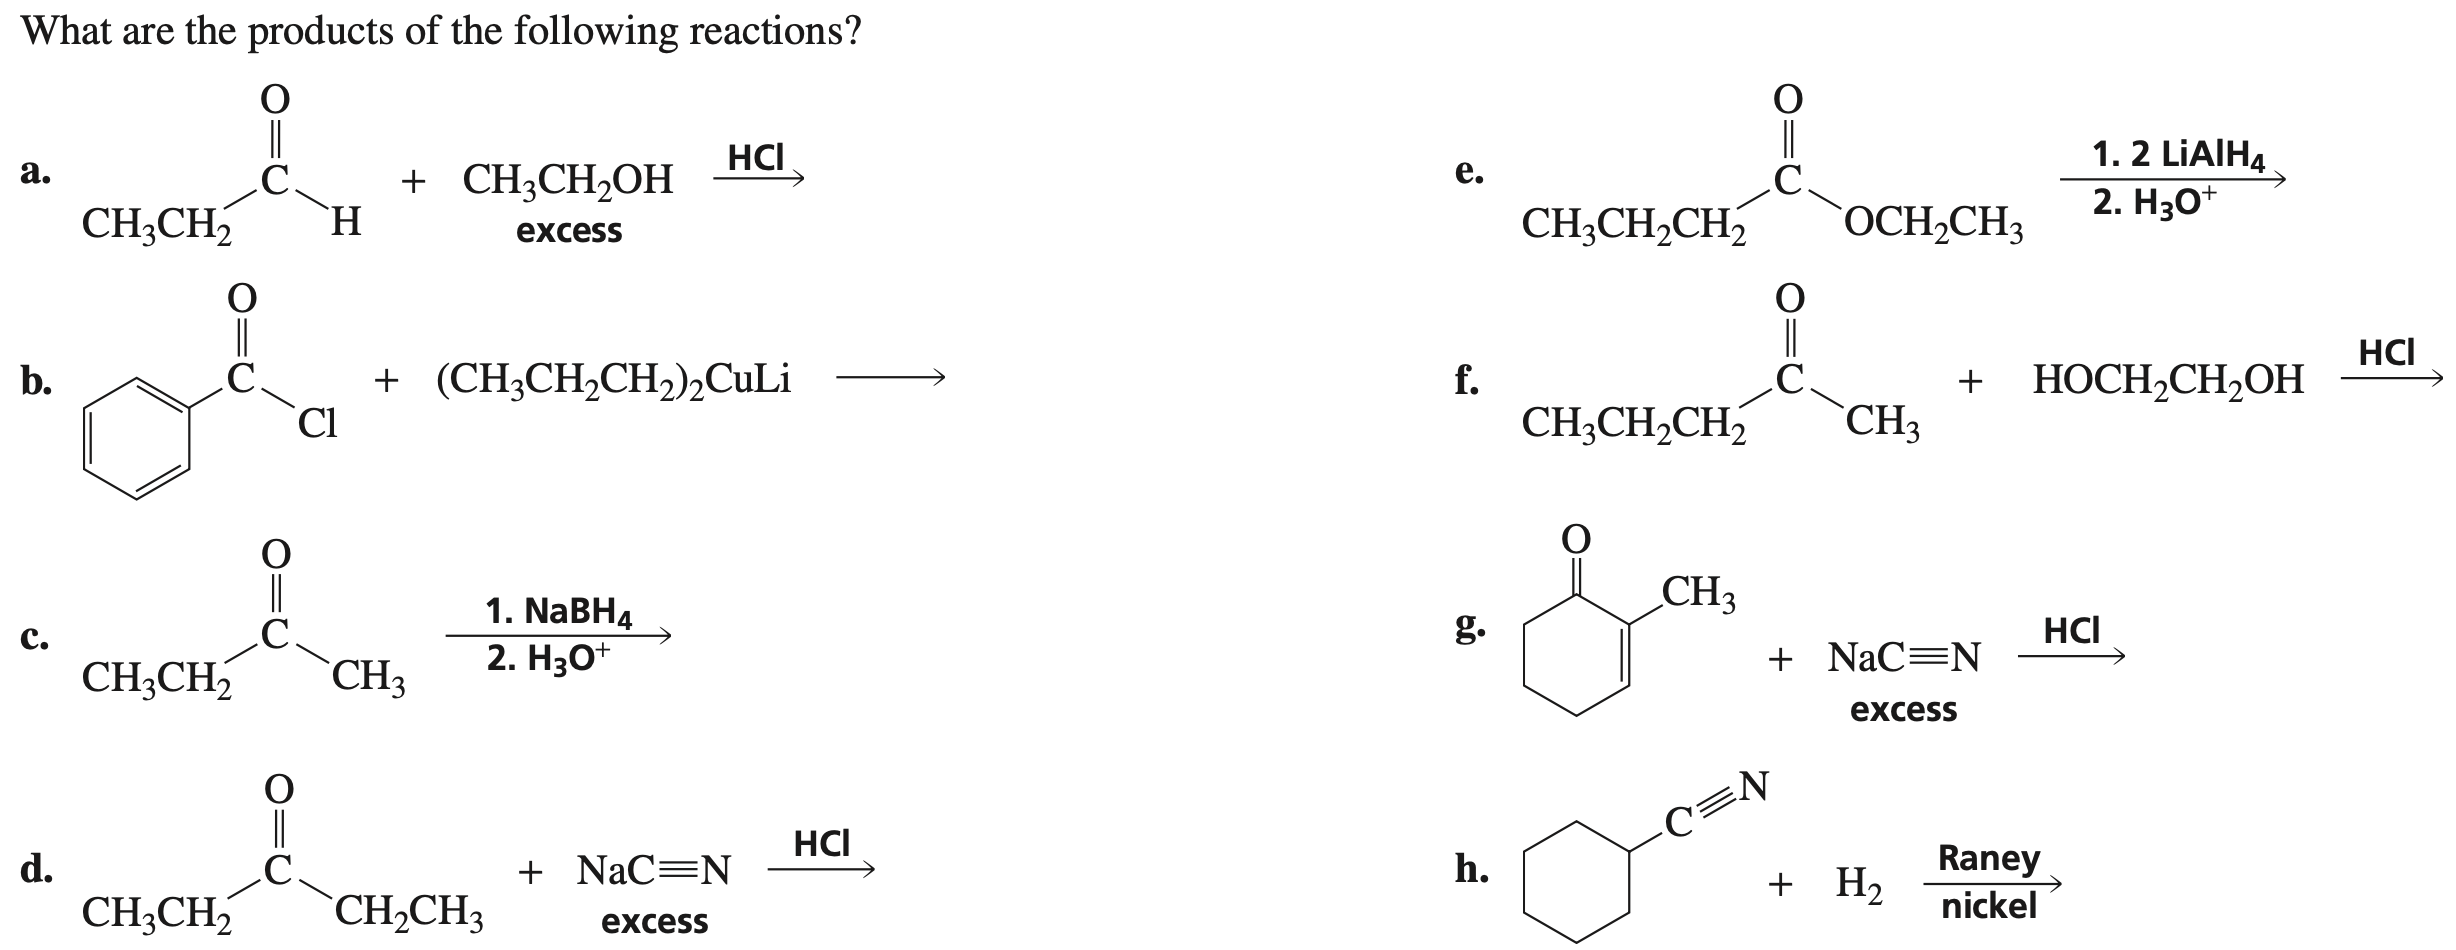 H2o ch3oh реакция. Бензальдегид nabh4. Карбоновая кислота lialh4. Альдегид nabh4 ch3oh. Метилфенилкетон nabh4 h2o.